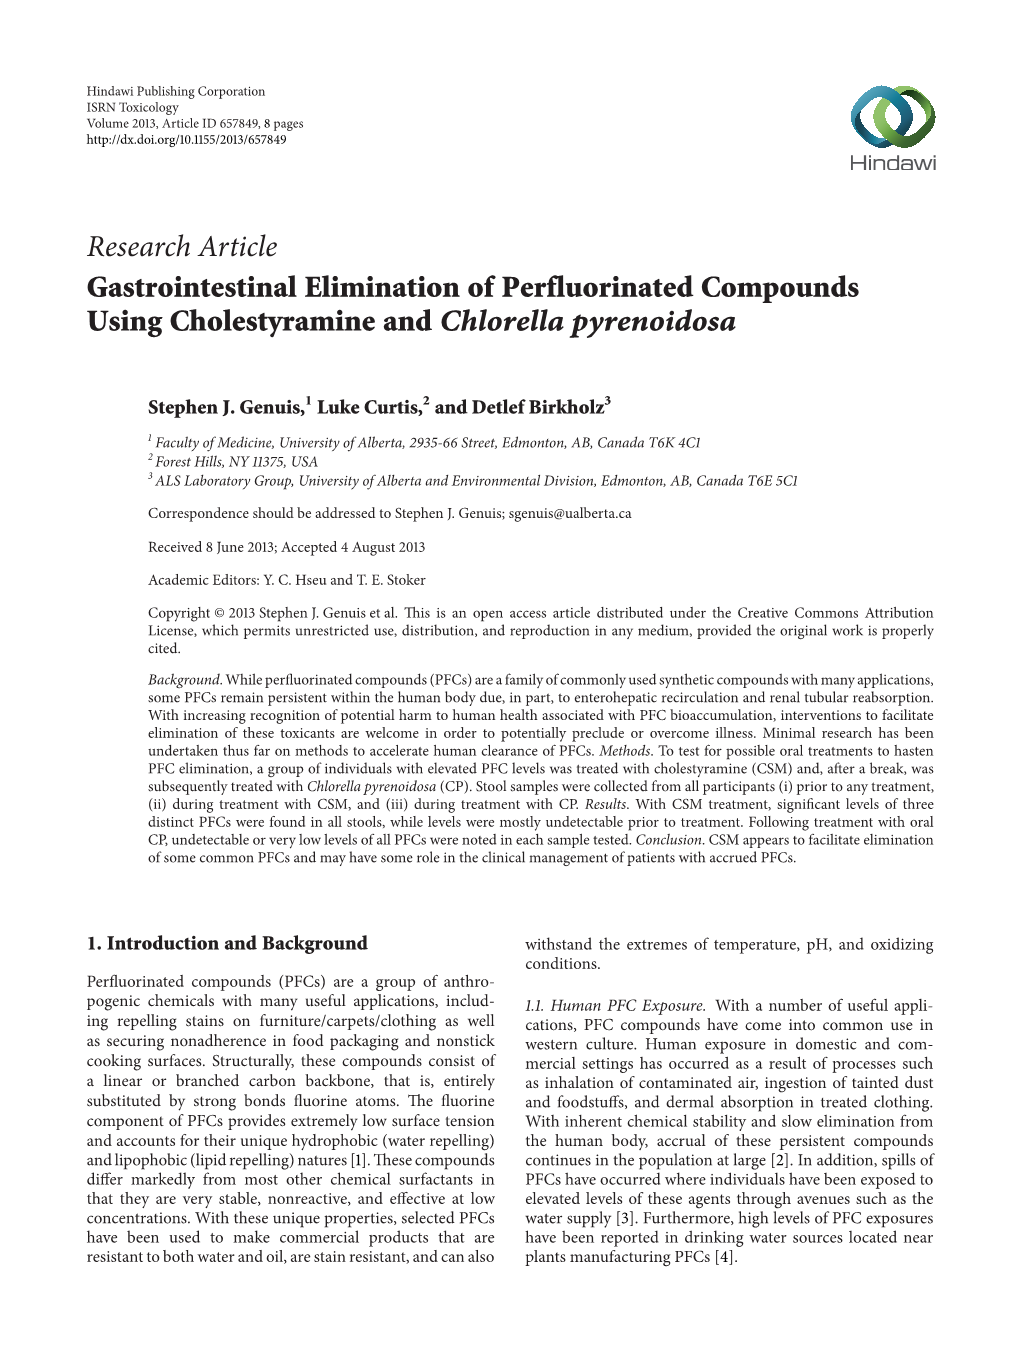 Gastrointestinal Elimination of Perfluorinated Compounds Using Cholestyramine and Chlorella Pyrenoidosa